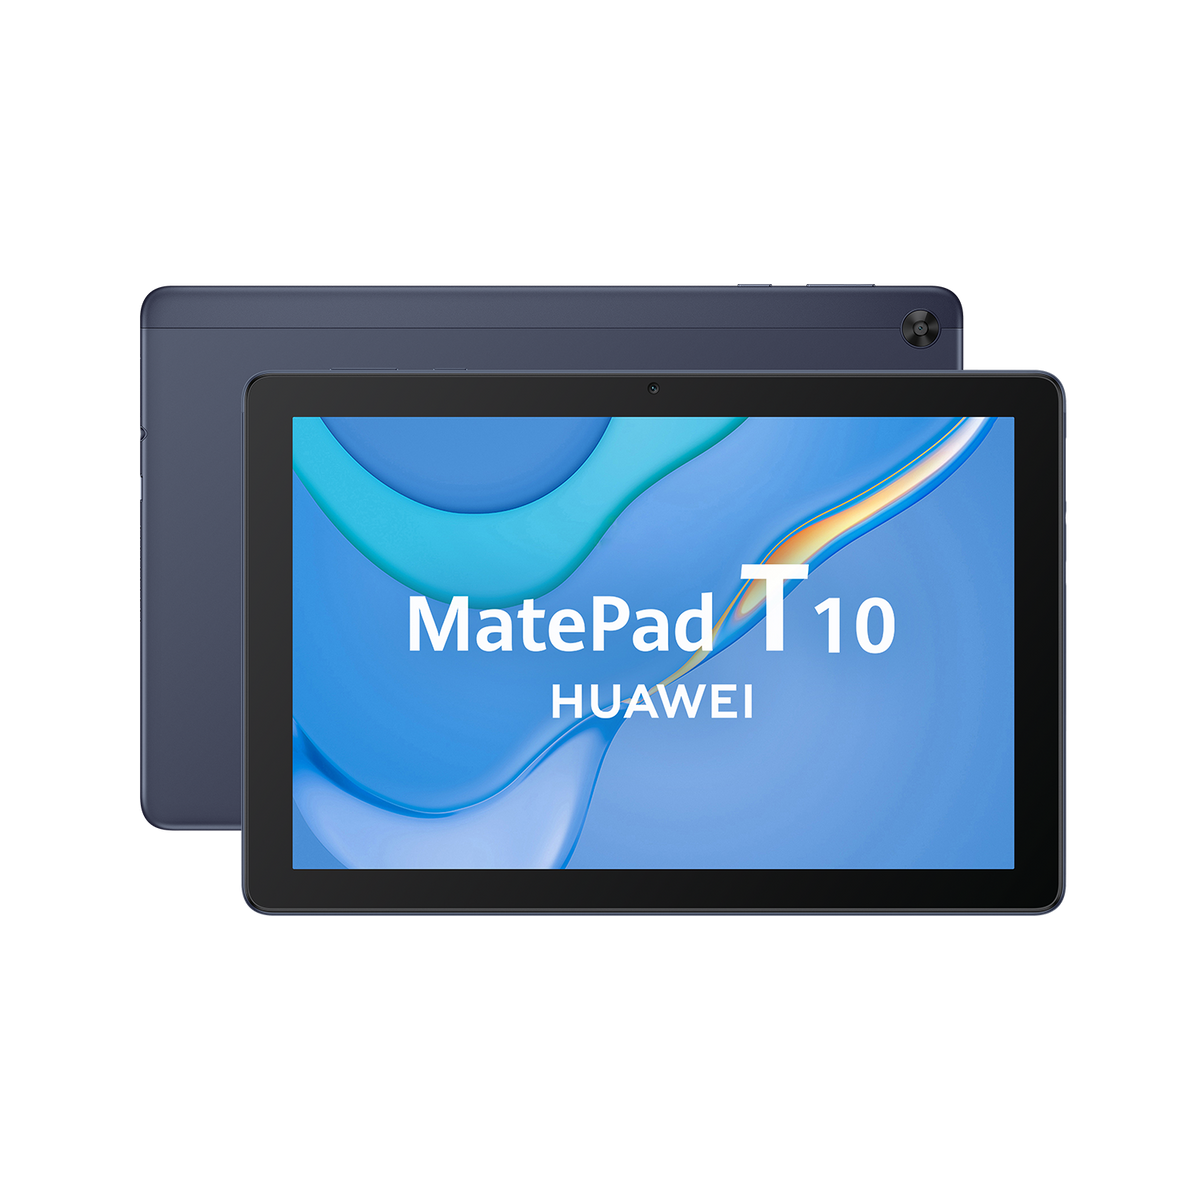 32 T10, GB, Tablet, HUAWEI Matepad 9,7 Zoll, Schwarz